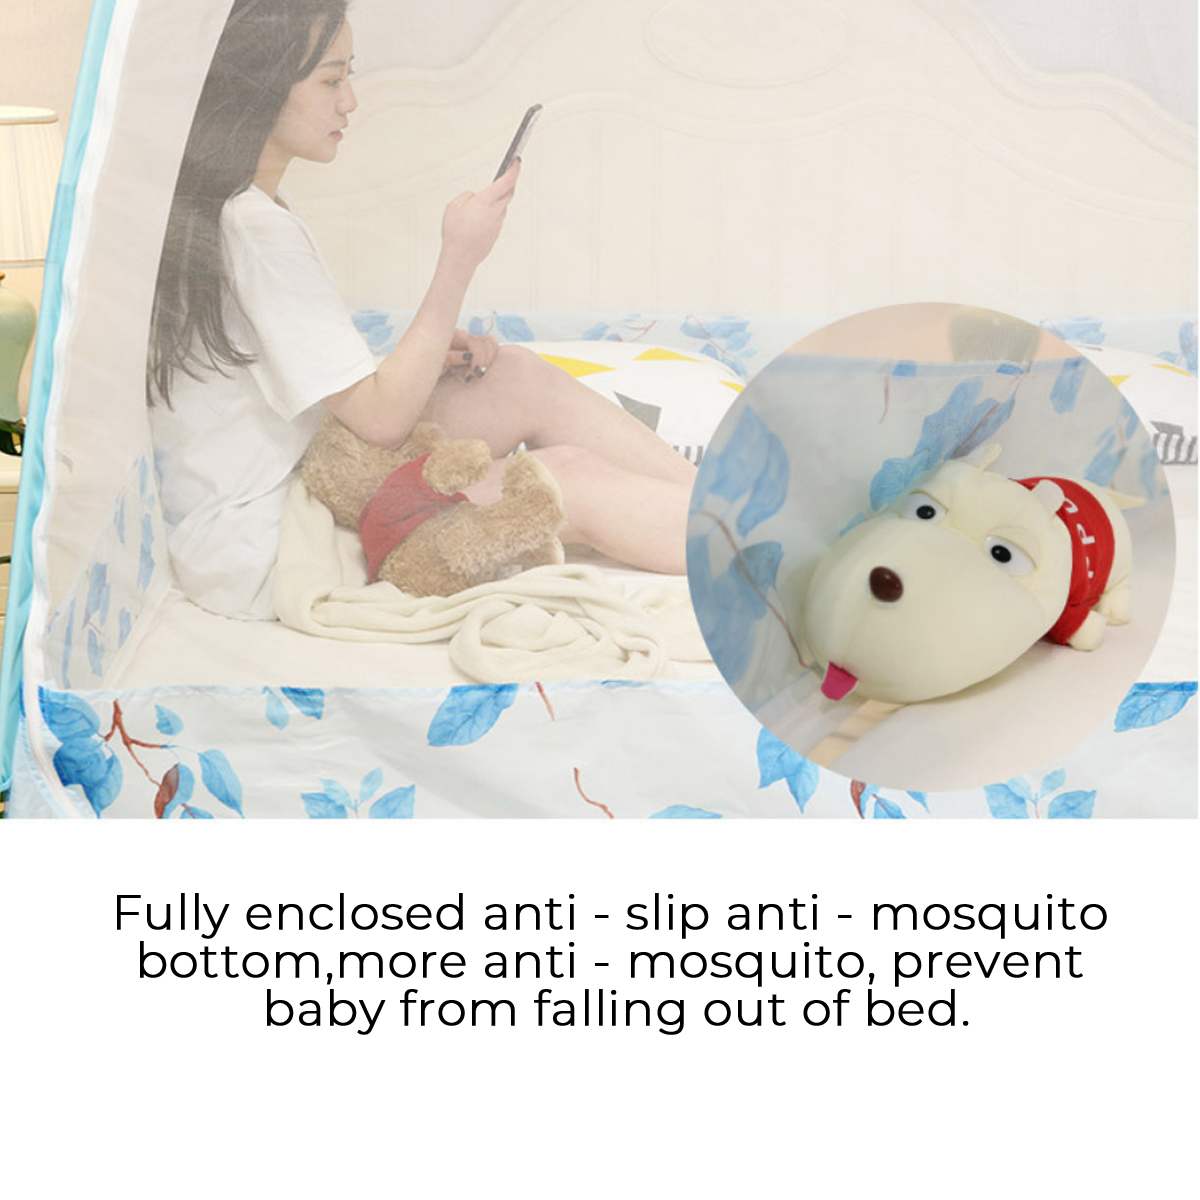 Romantic Double Bed Three-door Yurt Mosquito Net For Bed Insect Repellent Full Bottom Zipper Heightening Portable Bed Tents